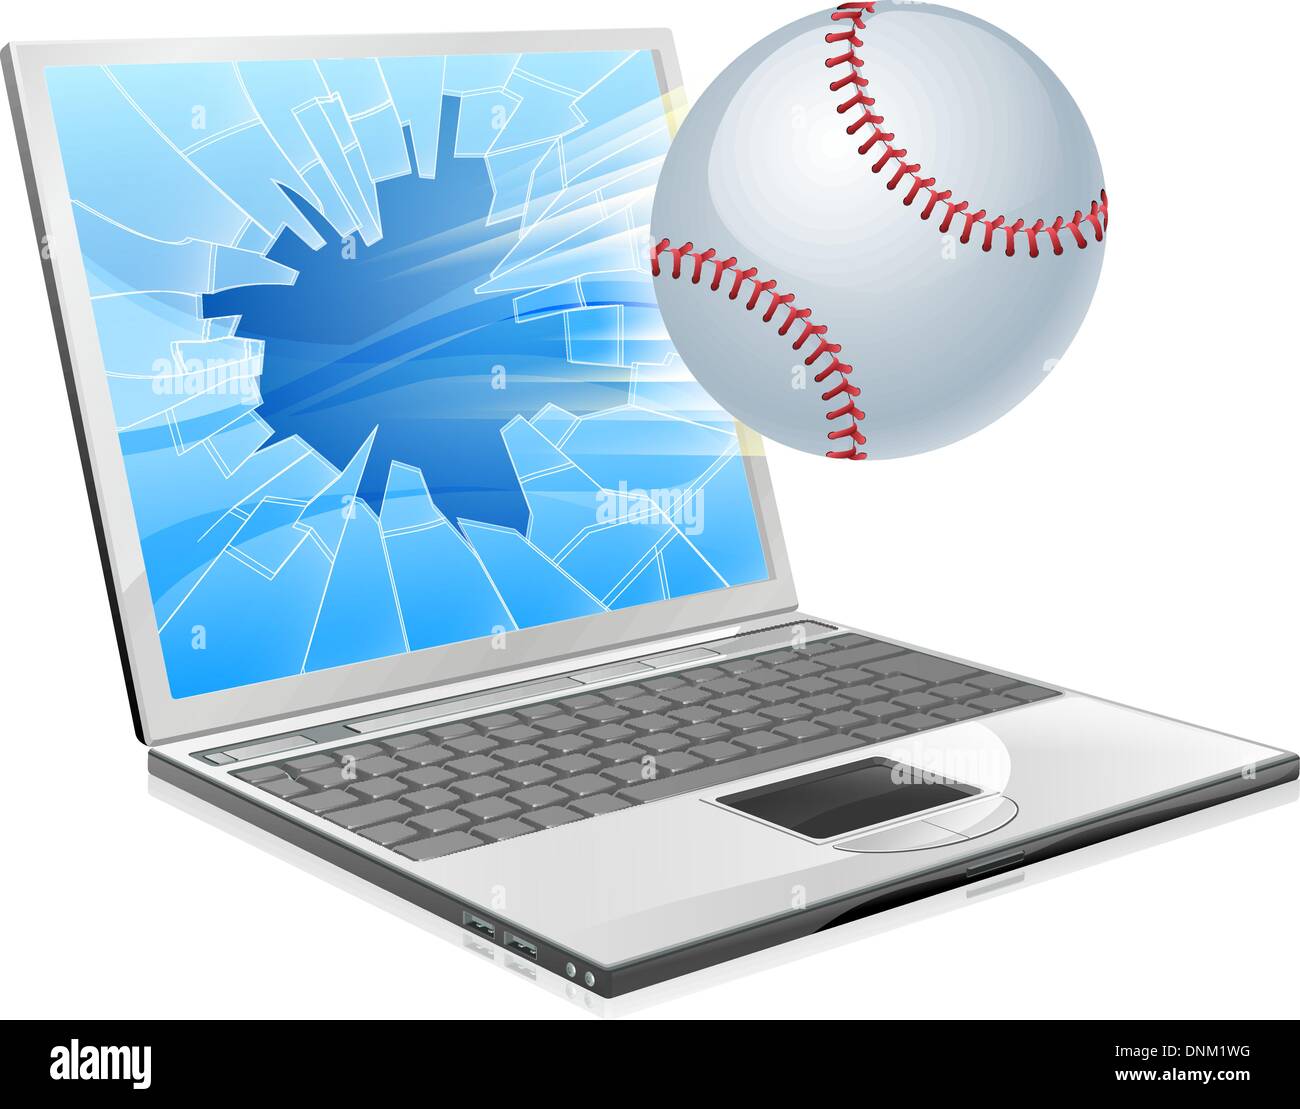 Abbildung eines Baseball-Ball fliegen aus einem defekten Laptop-Computer-Bildschirm Stock Vektor